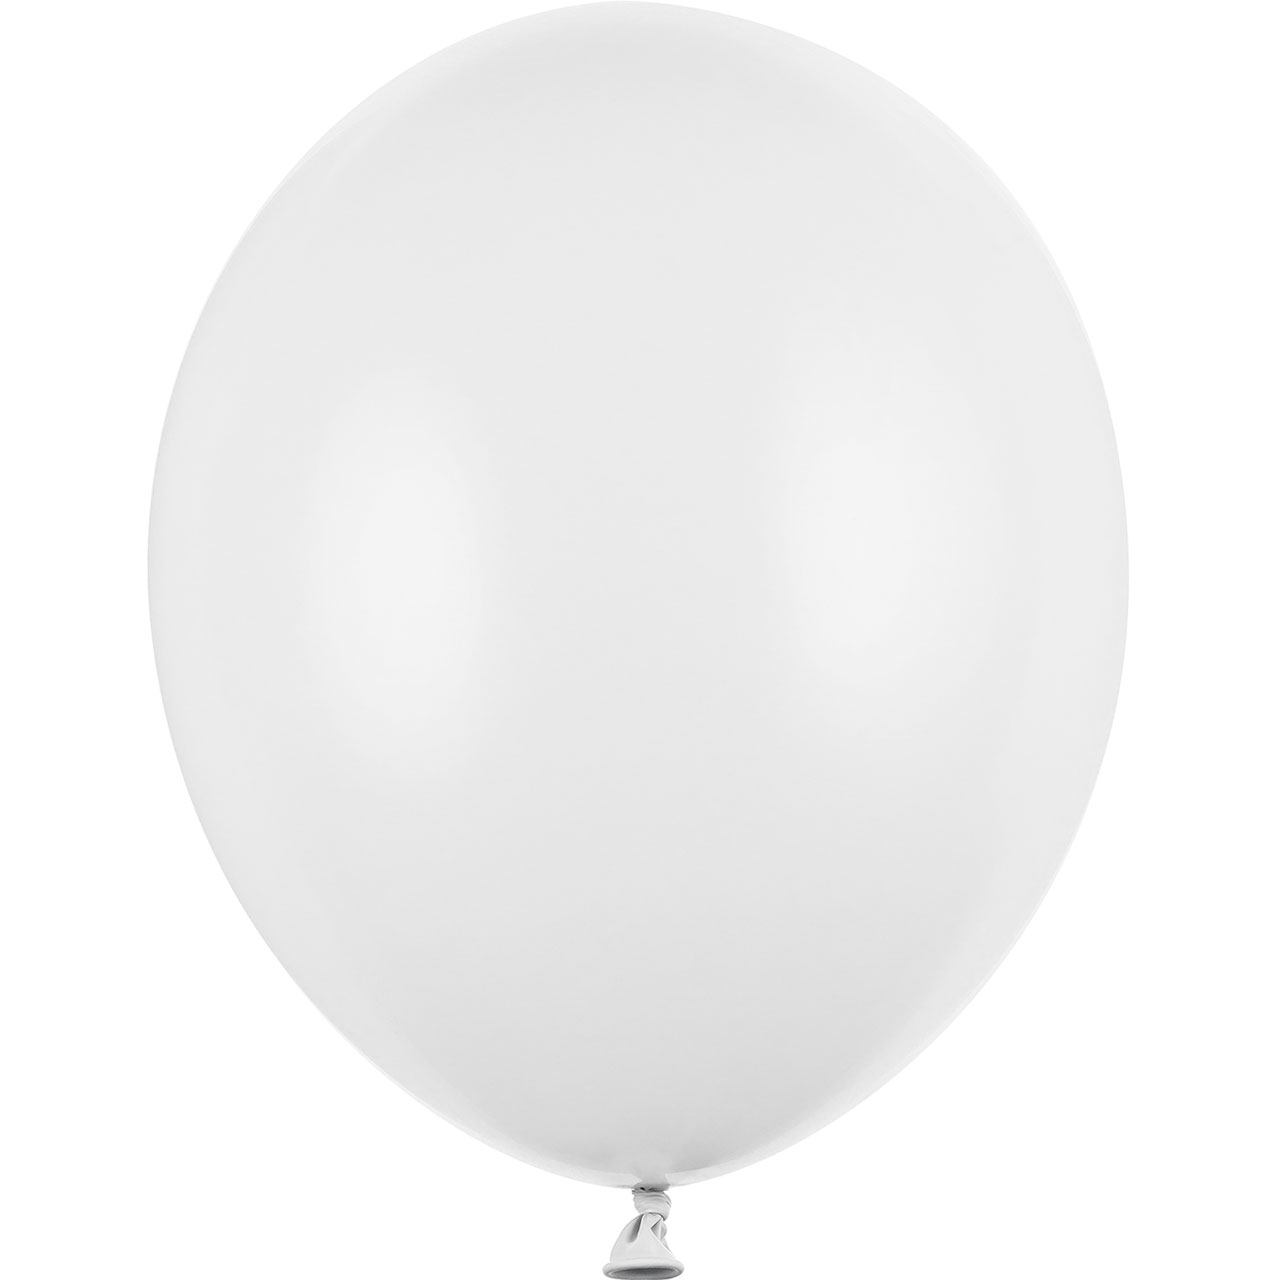 Latexballons - Pastellweiß 27cm